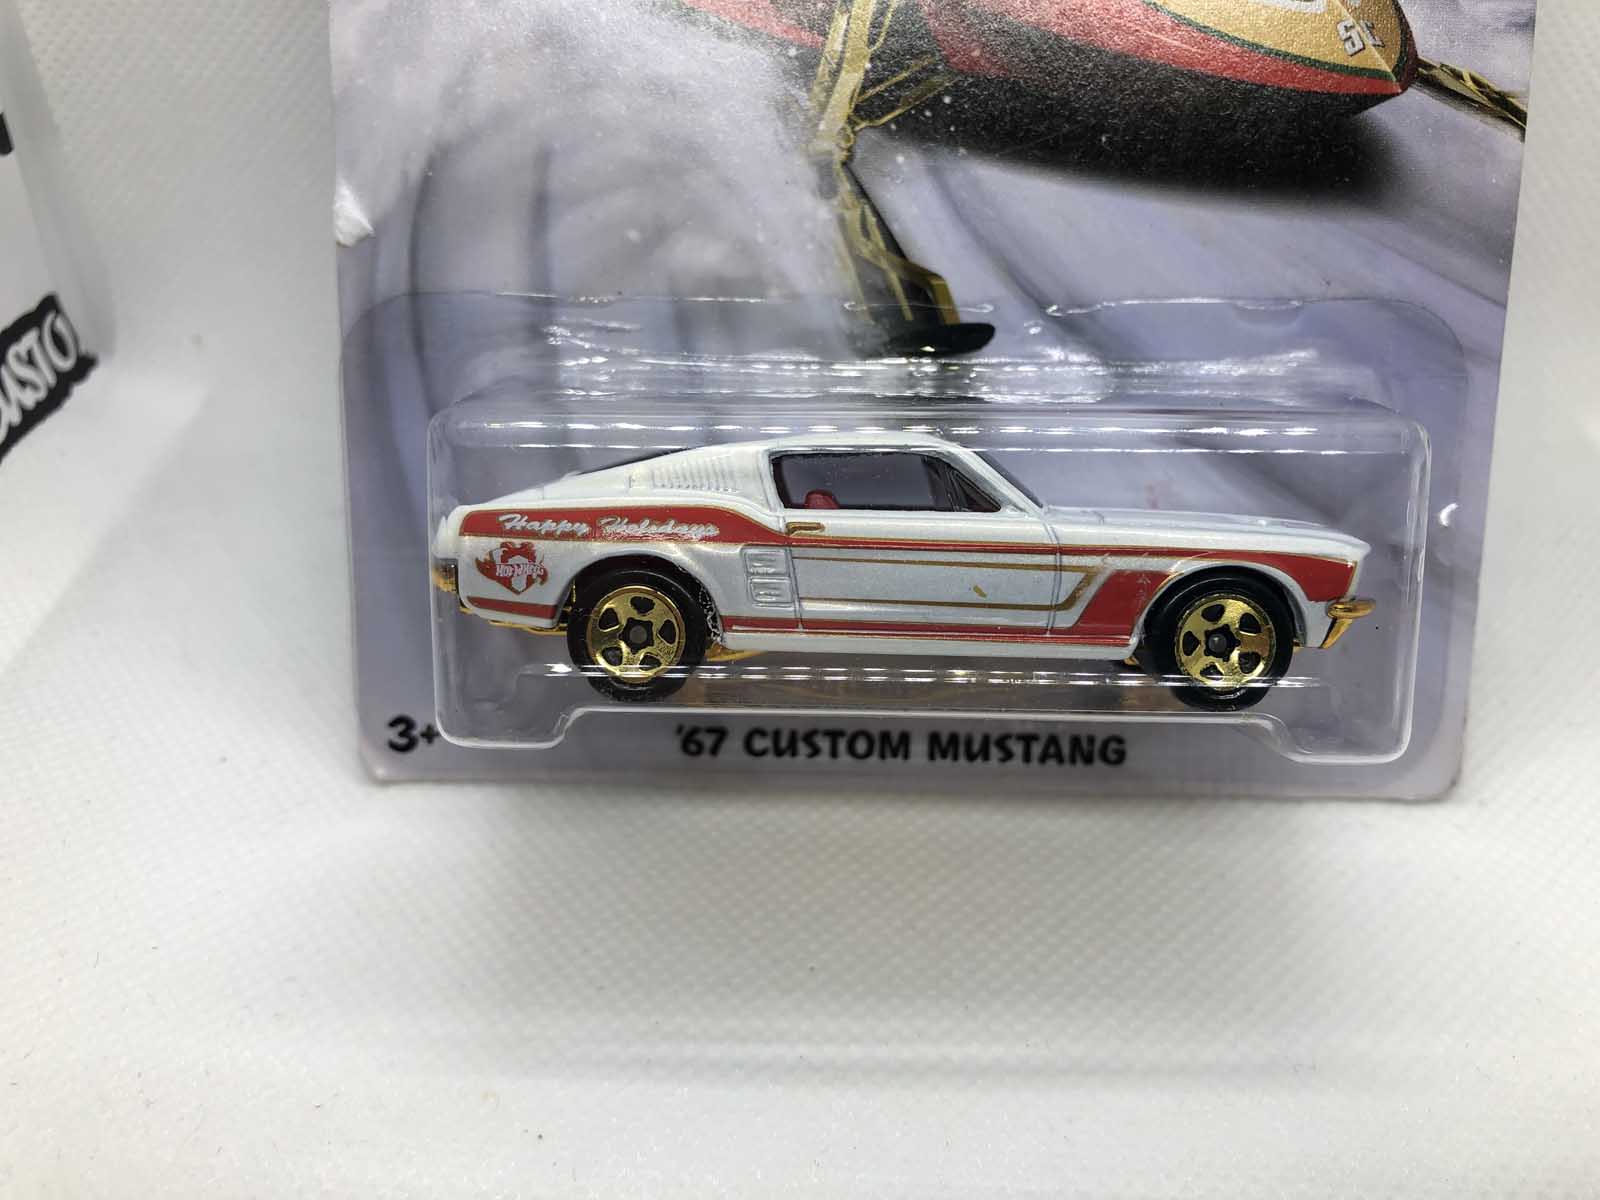 67 Custom Mustang